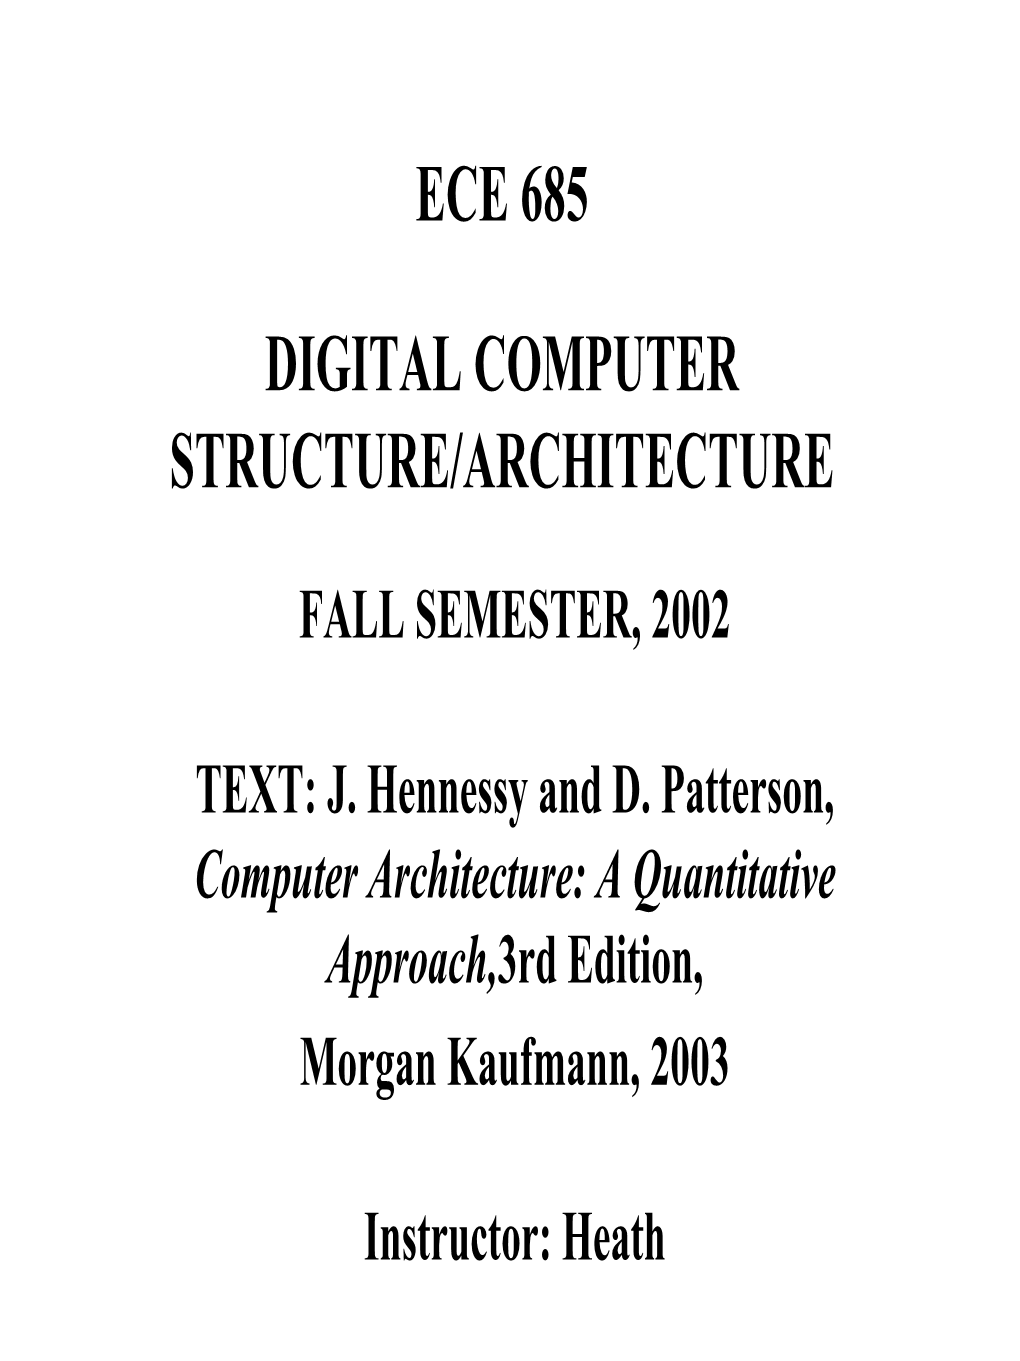 Ece 685 Digital Computer Structure/Architecture